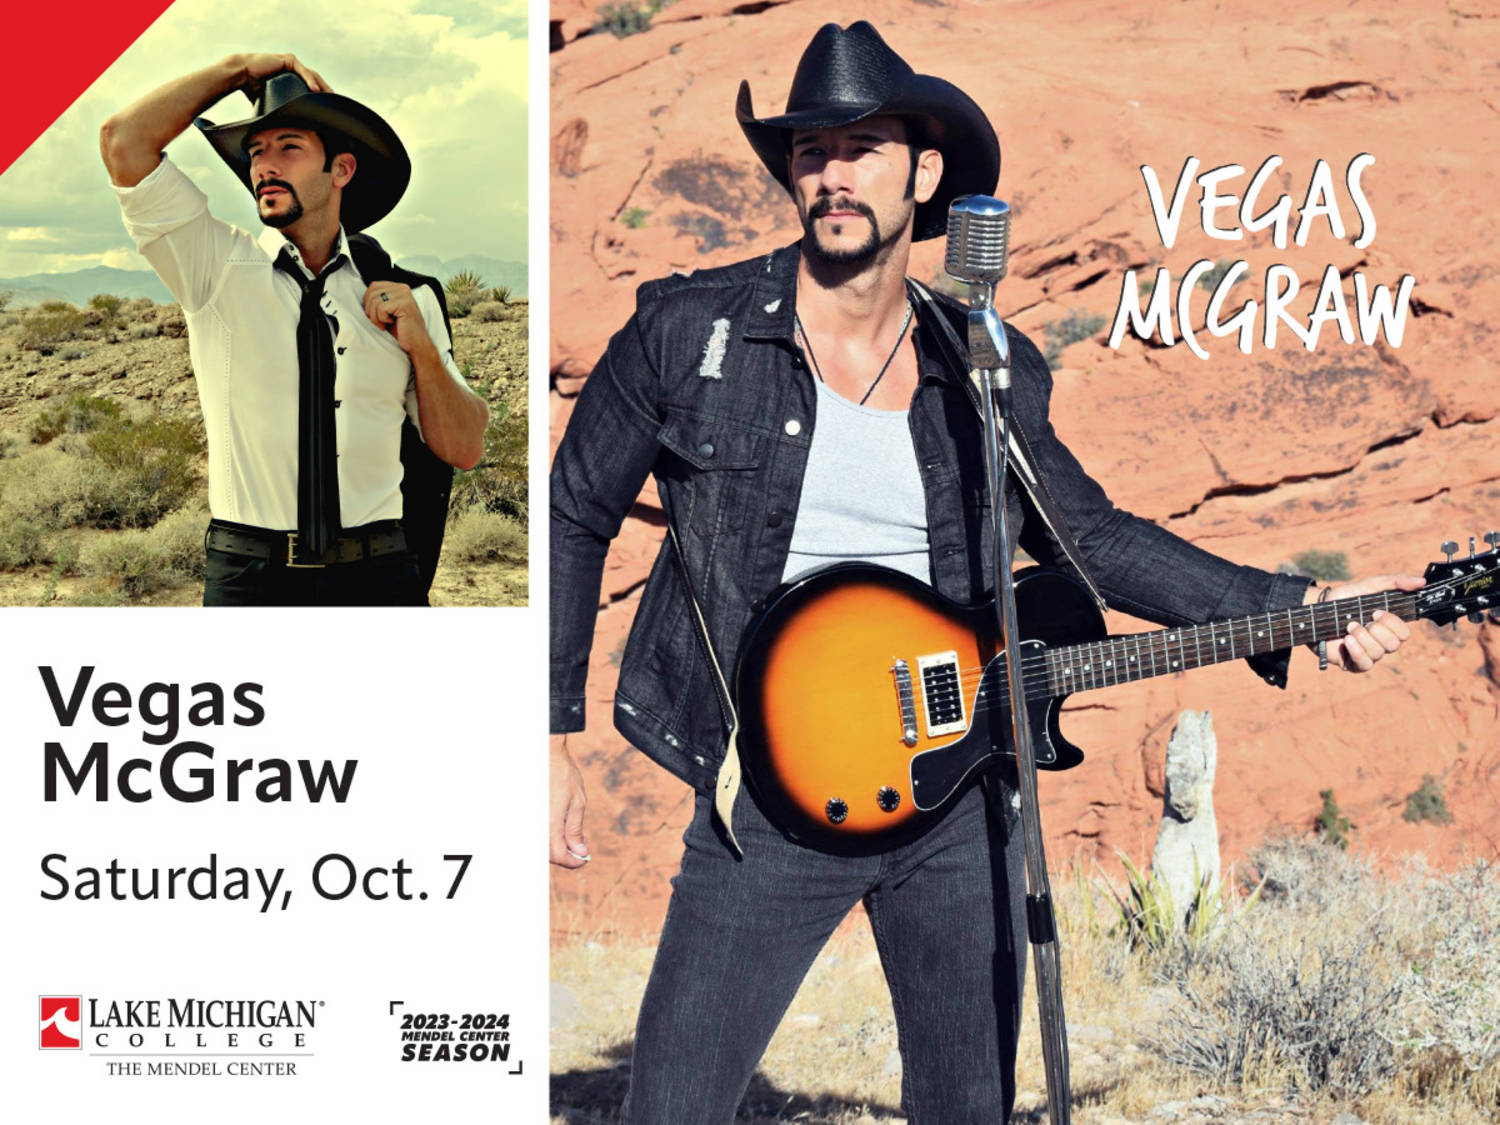 Award-winning Tim McGraw tribute show Vegas McGraw coming to the Lake Michigan College Mendel Center Oct. 7